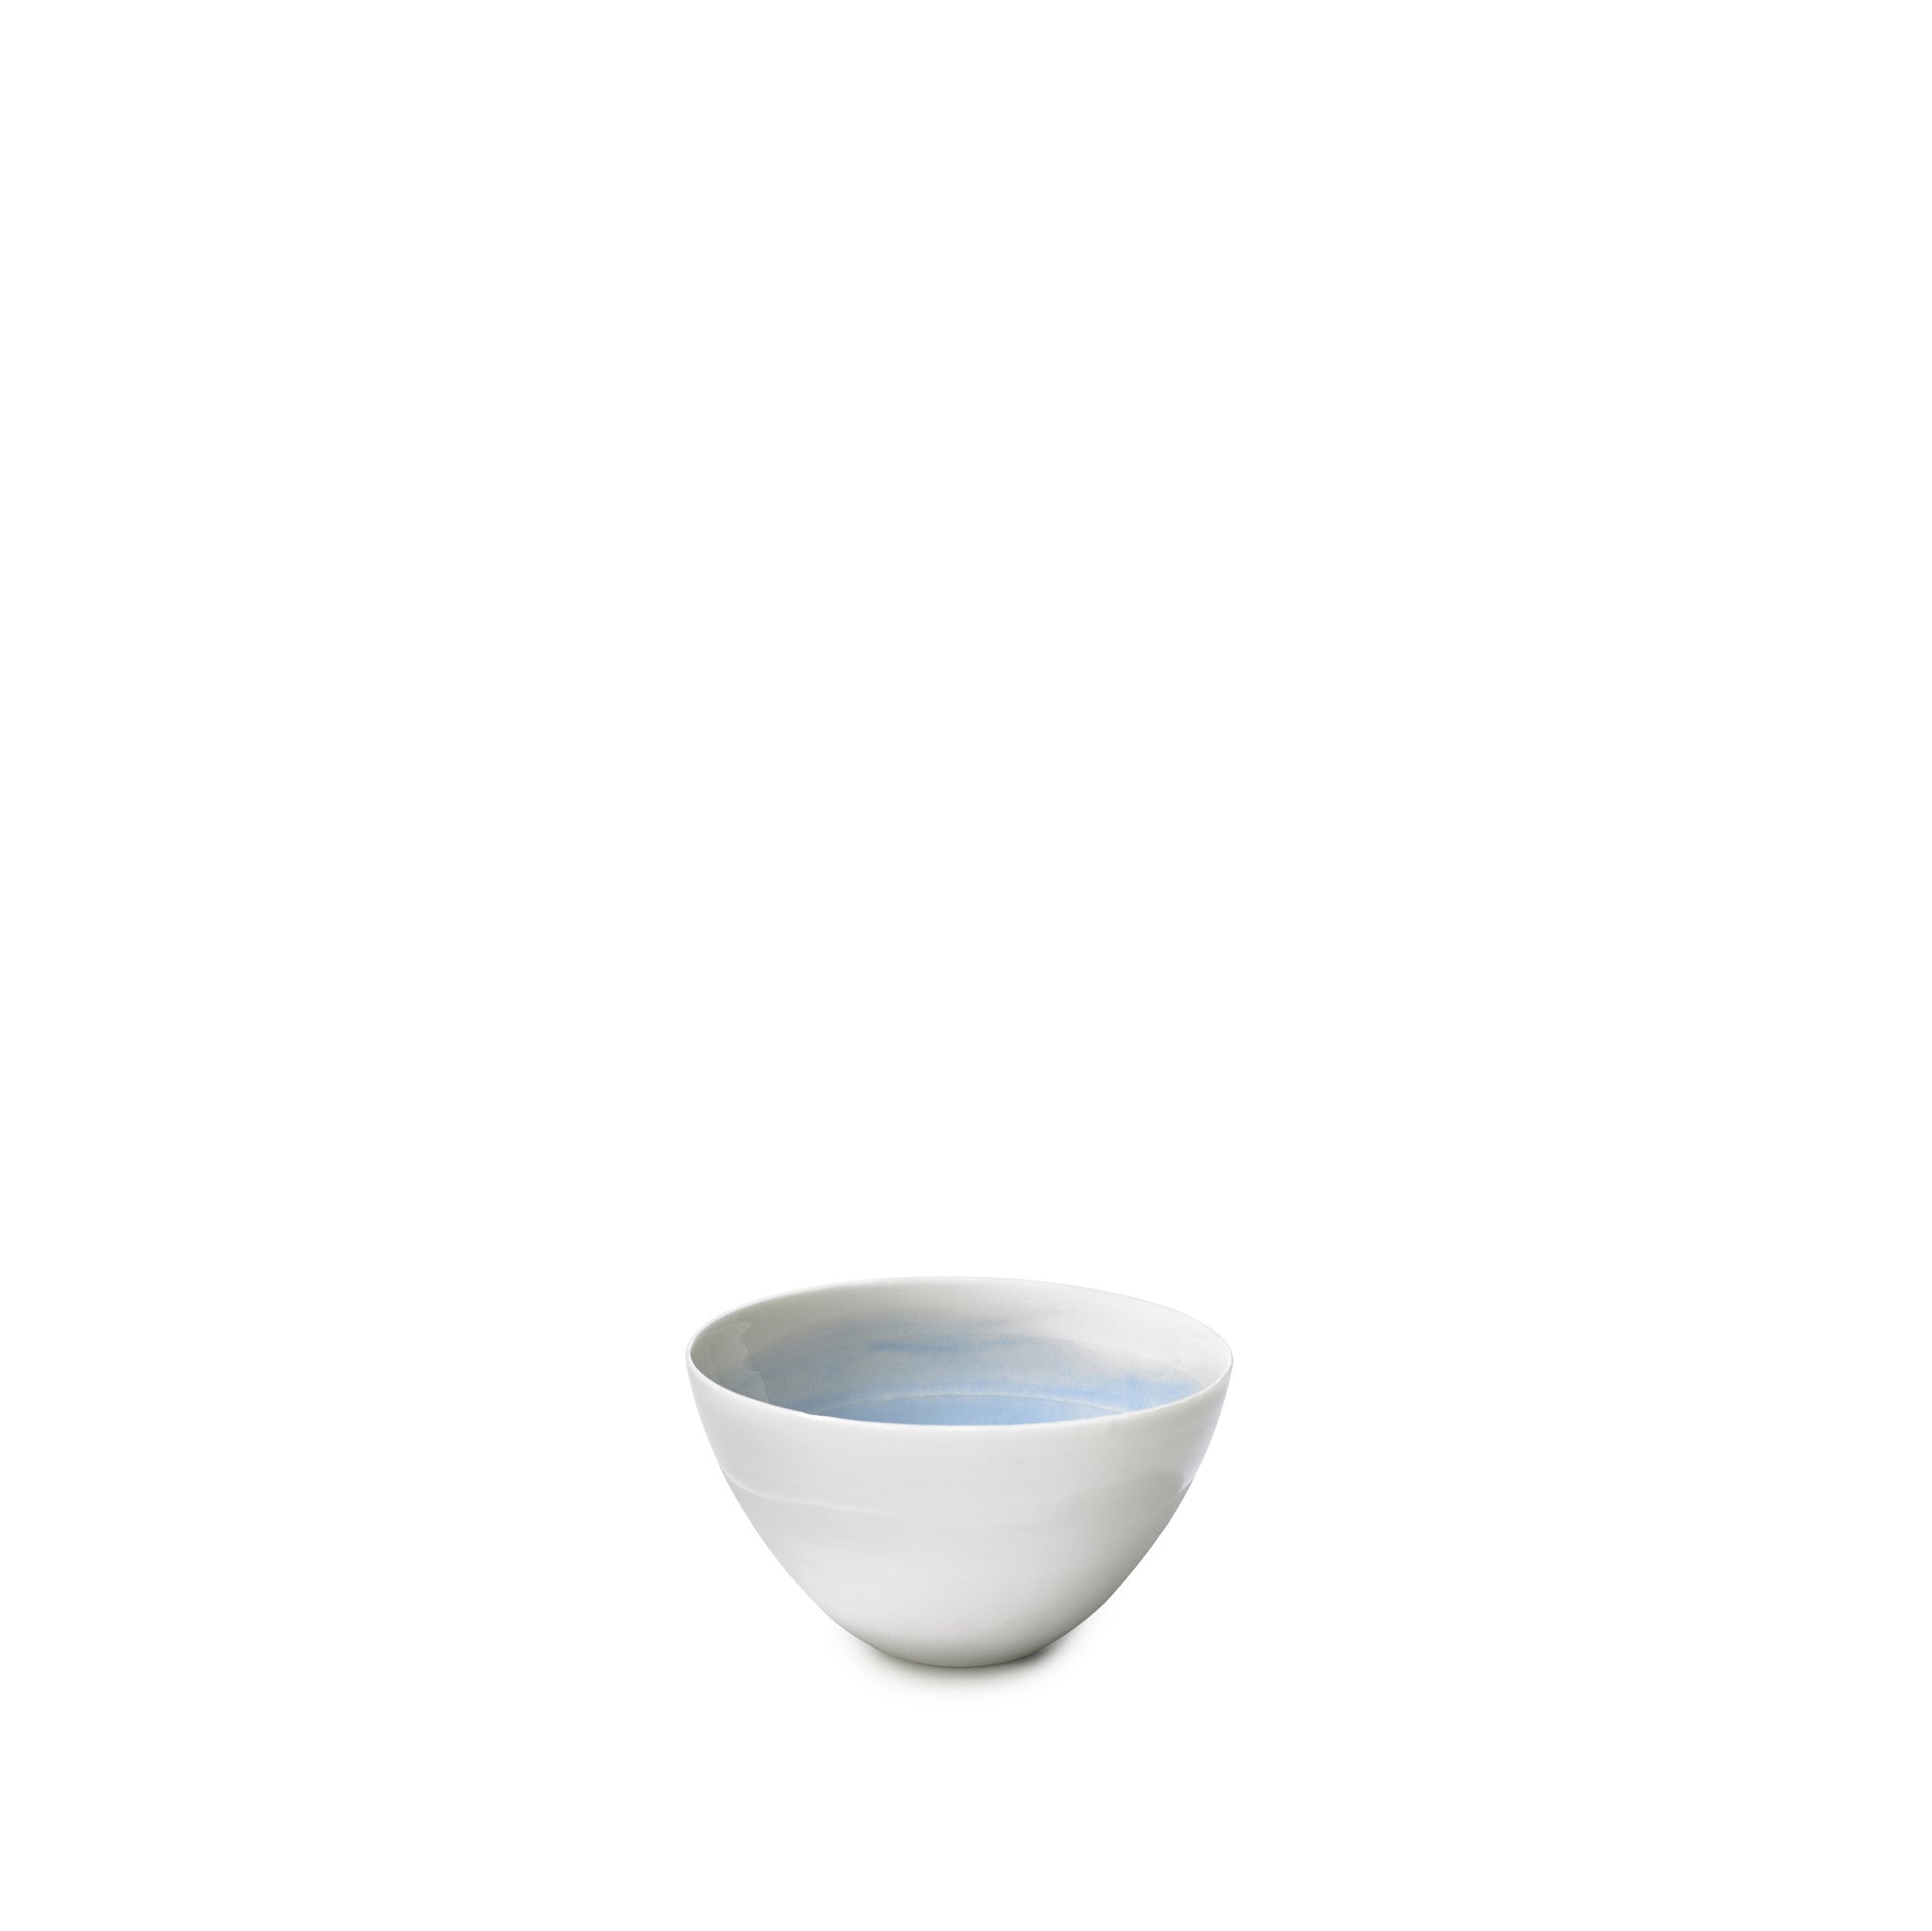 Small Light Blue Ceramic Bowl with White Edge, 8cm